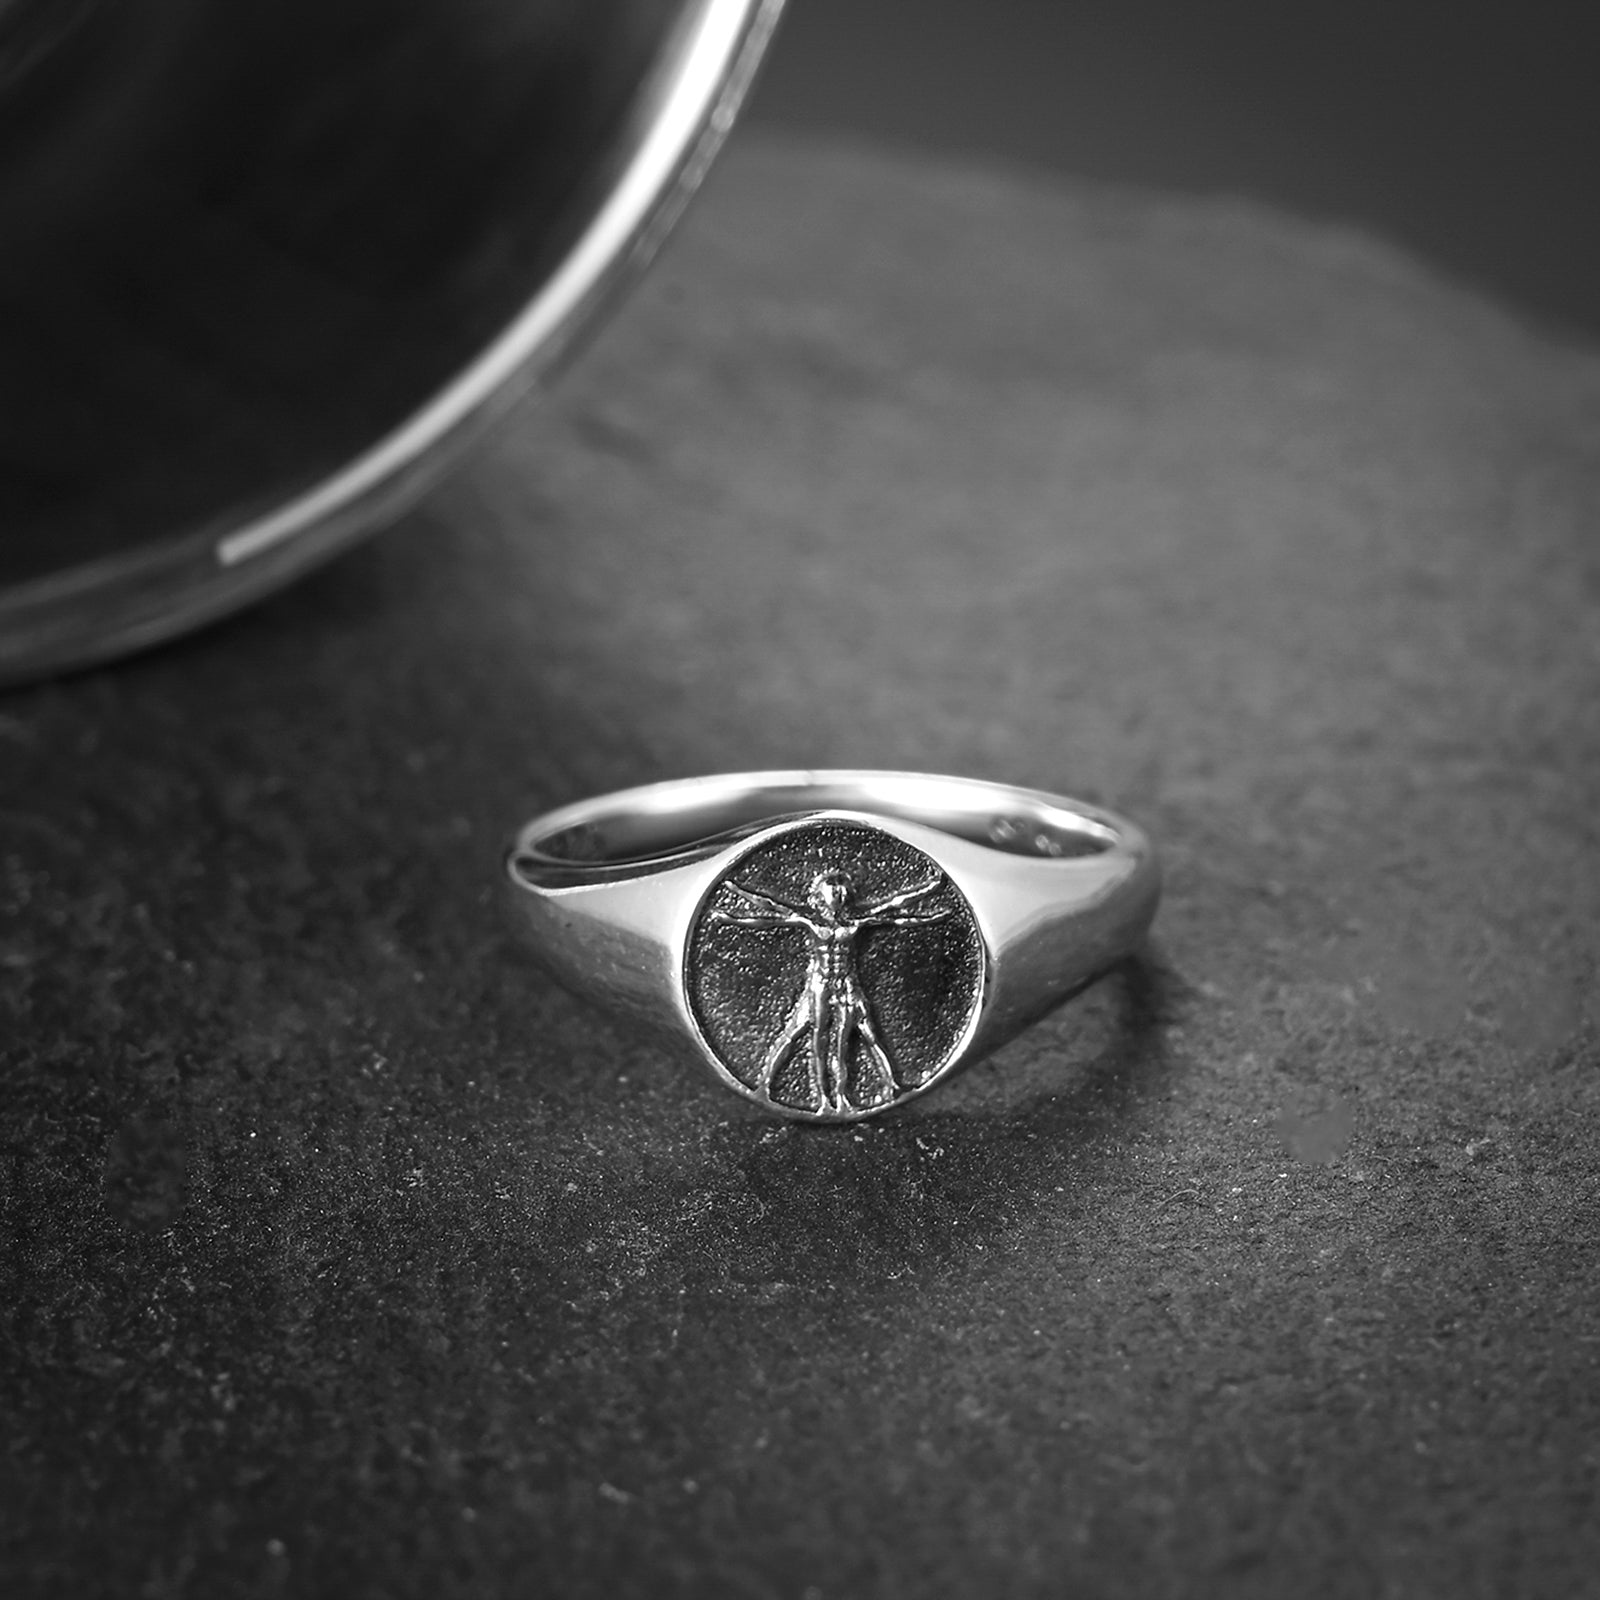 Vitruvian Man - Ring